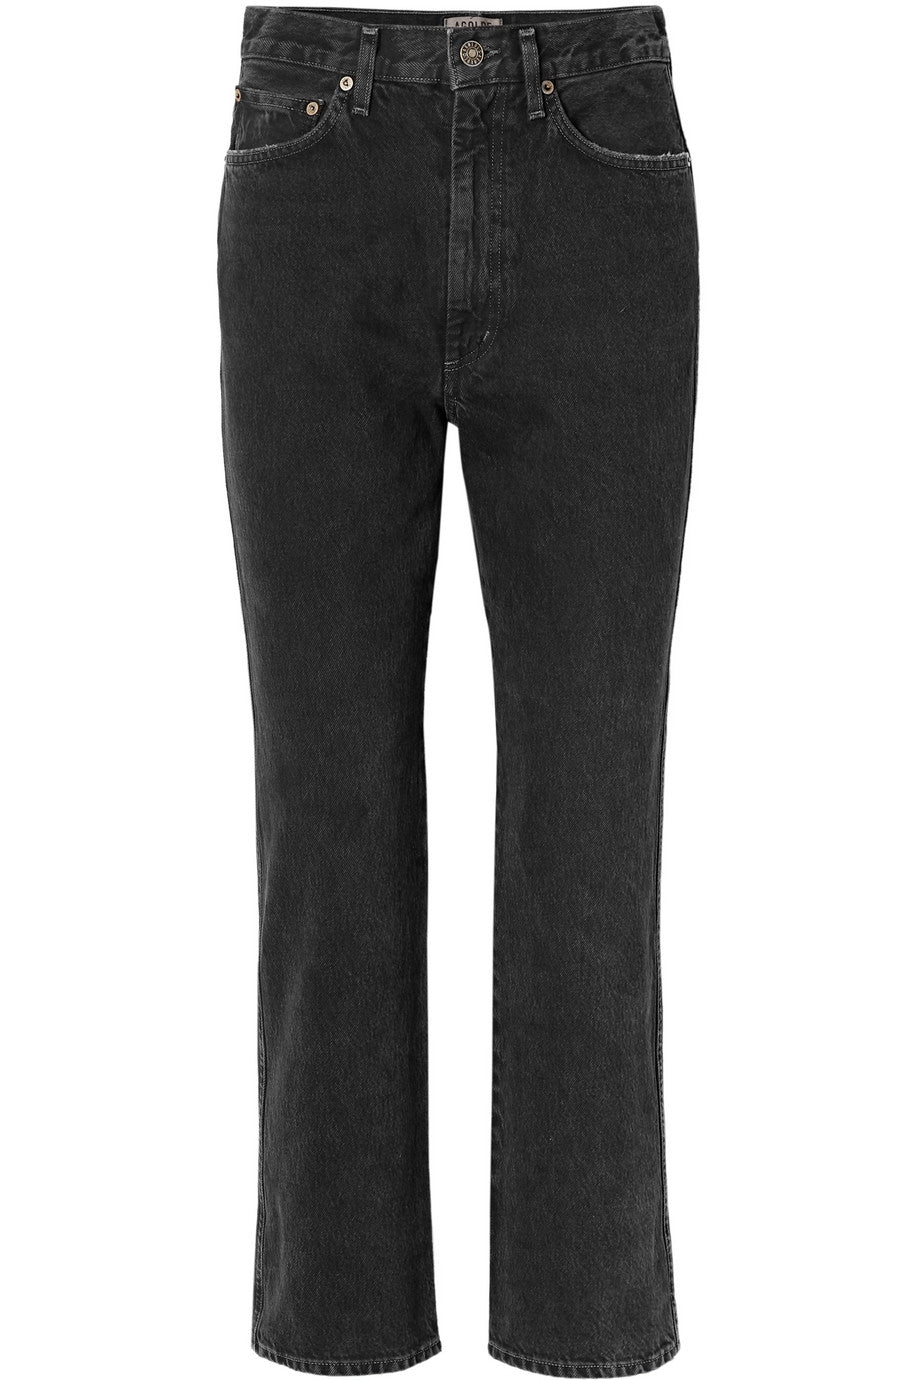 Agolde - Black denim cropped high rise flared jeans